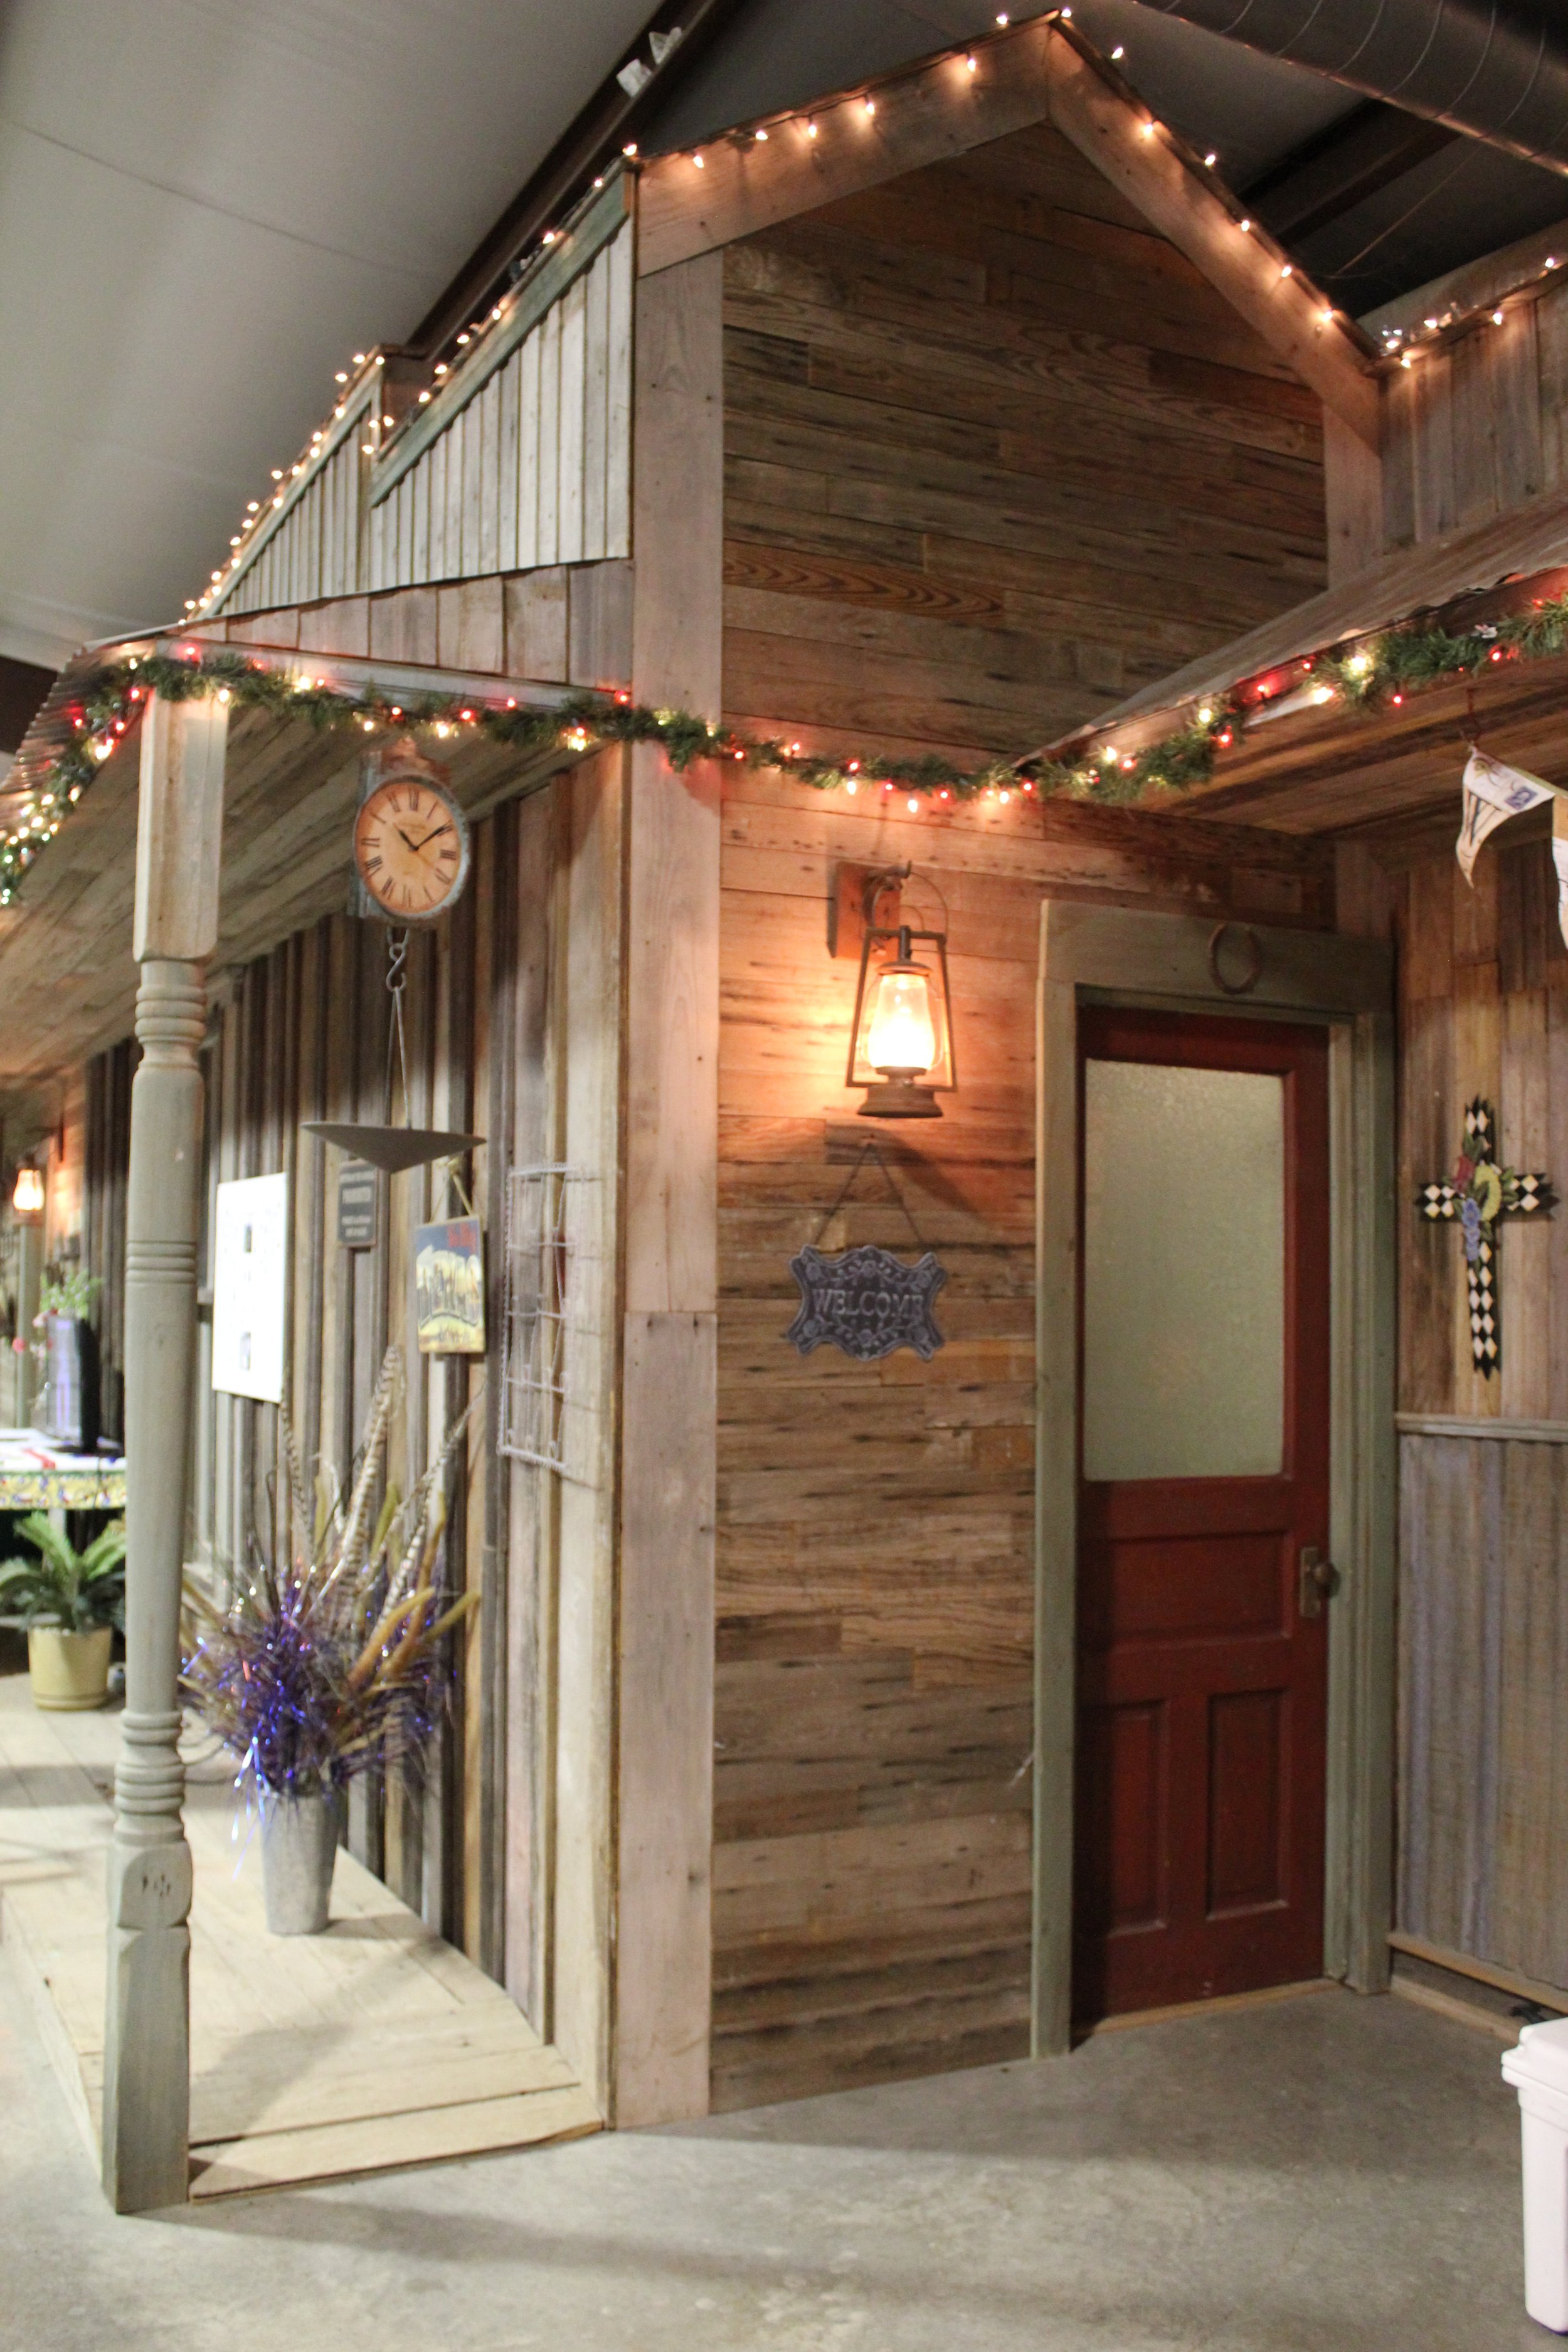 Party barn, Texas style-saloon-indian hills-office.JPG